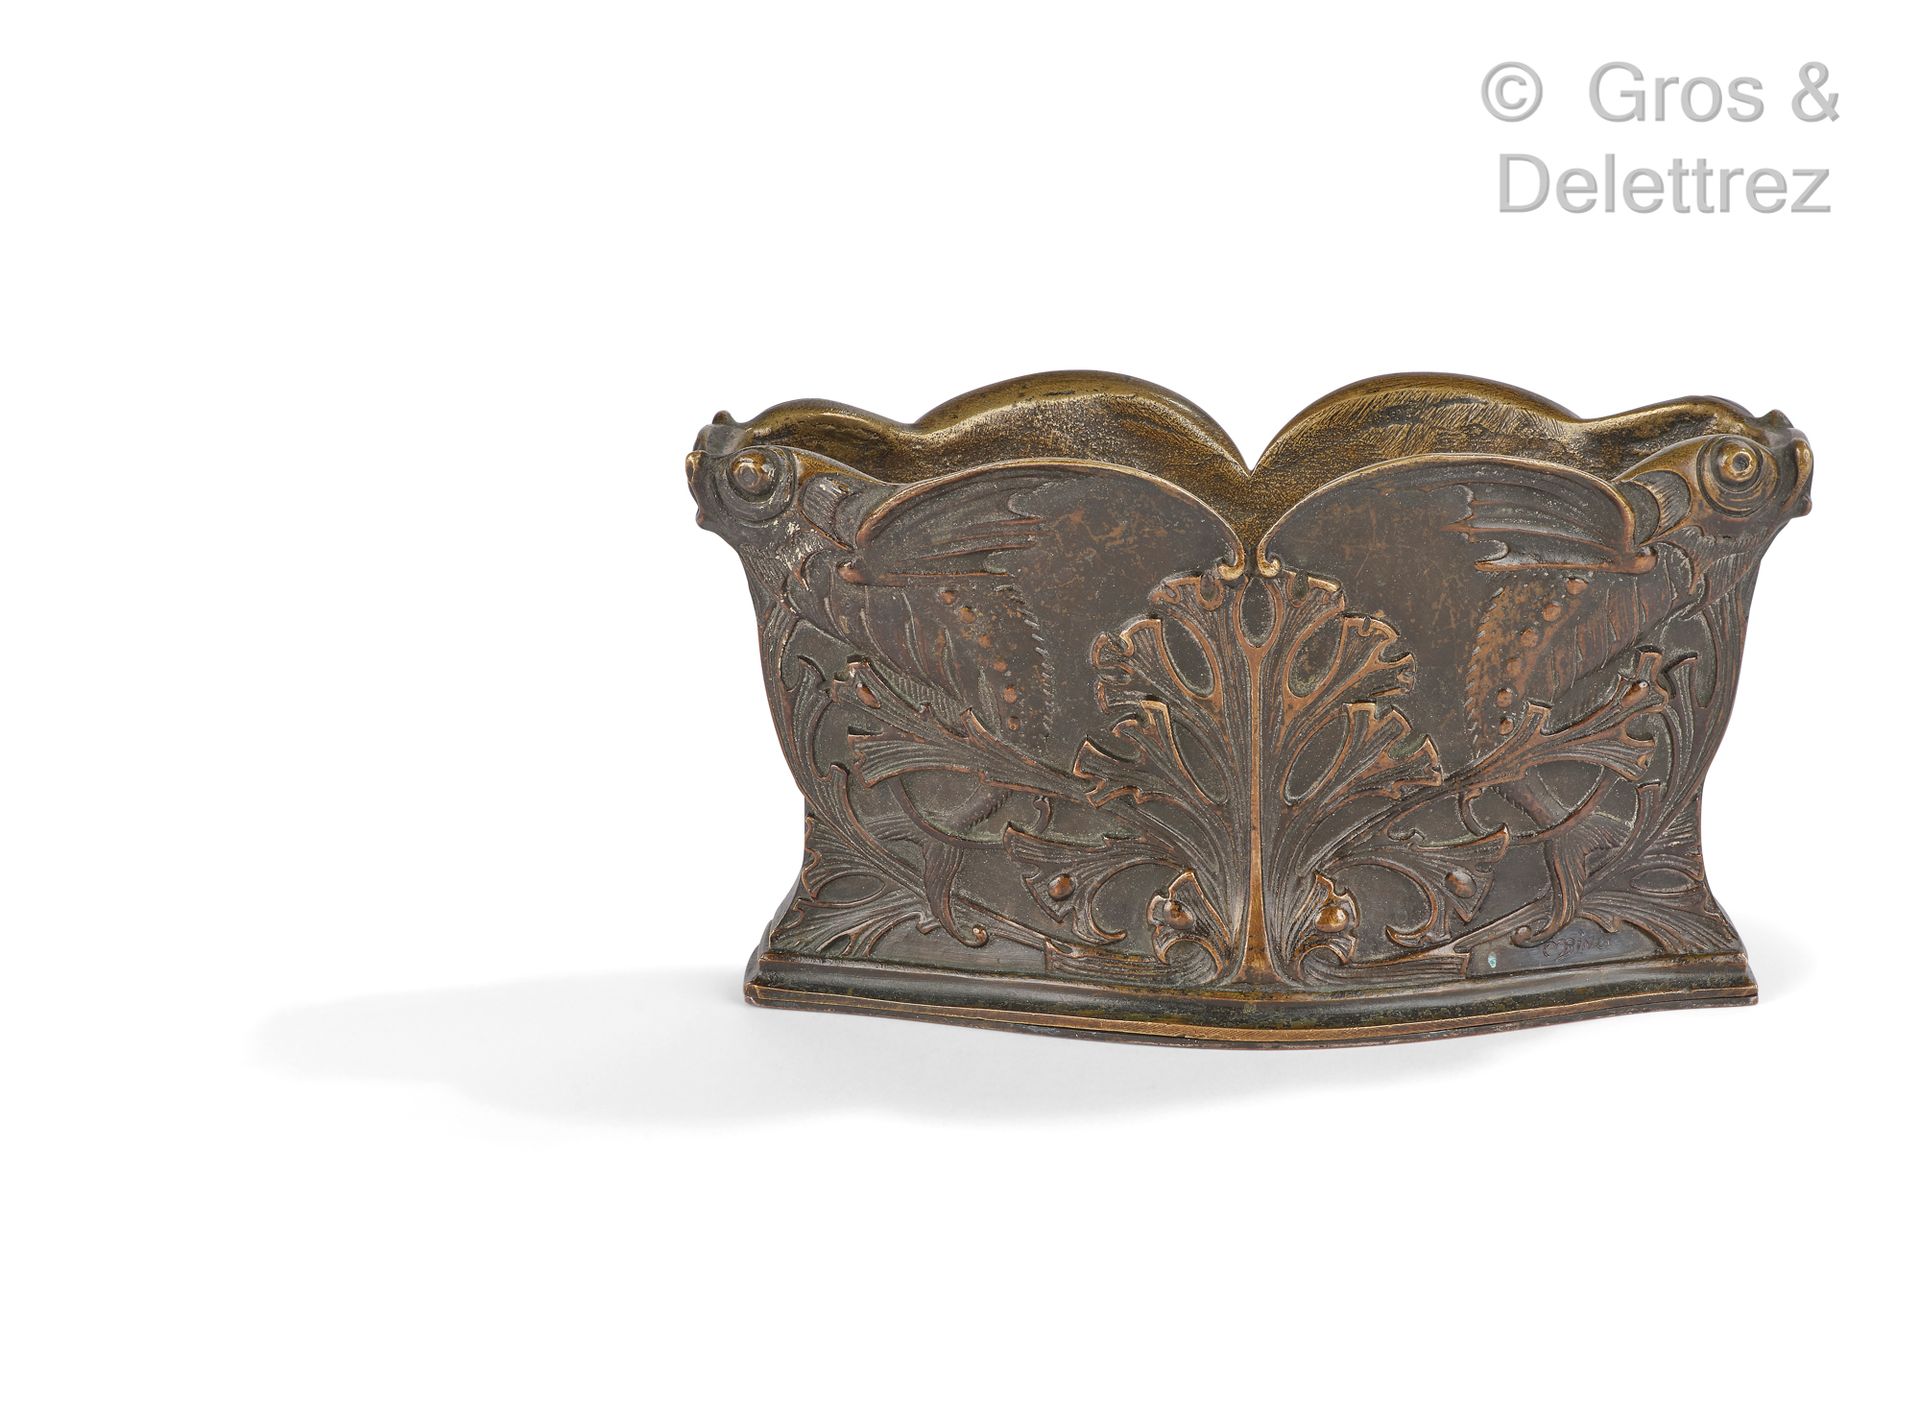 Marcel BING (1875-1921) 铜制花盆，带有奖状铜锈和锦鲤装饰。

签名为 "MBing"。

约1900年。

高：11 / 宽：20 厘米